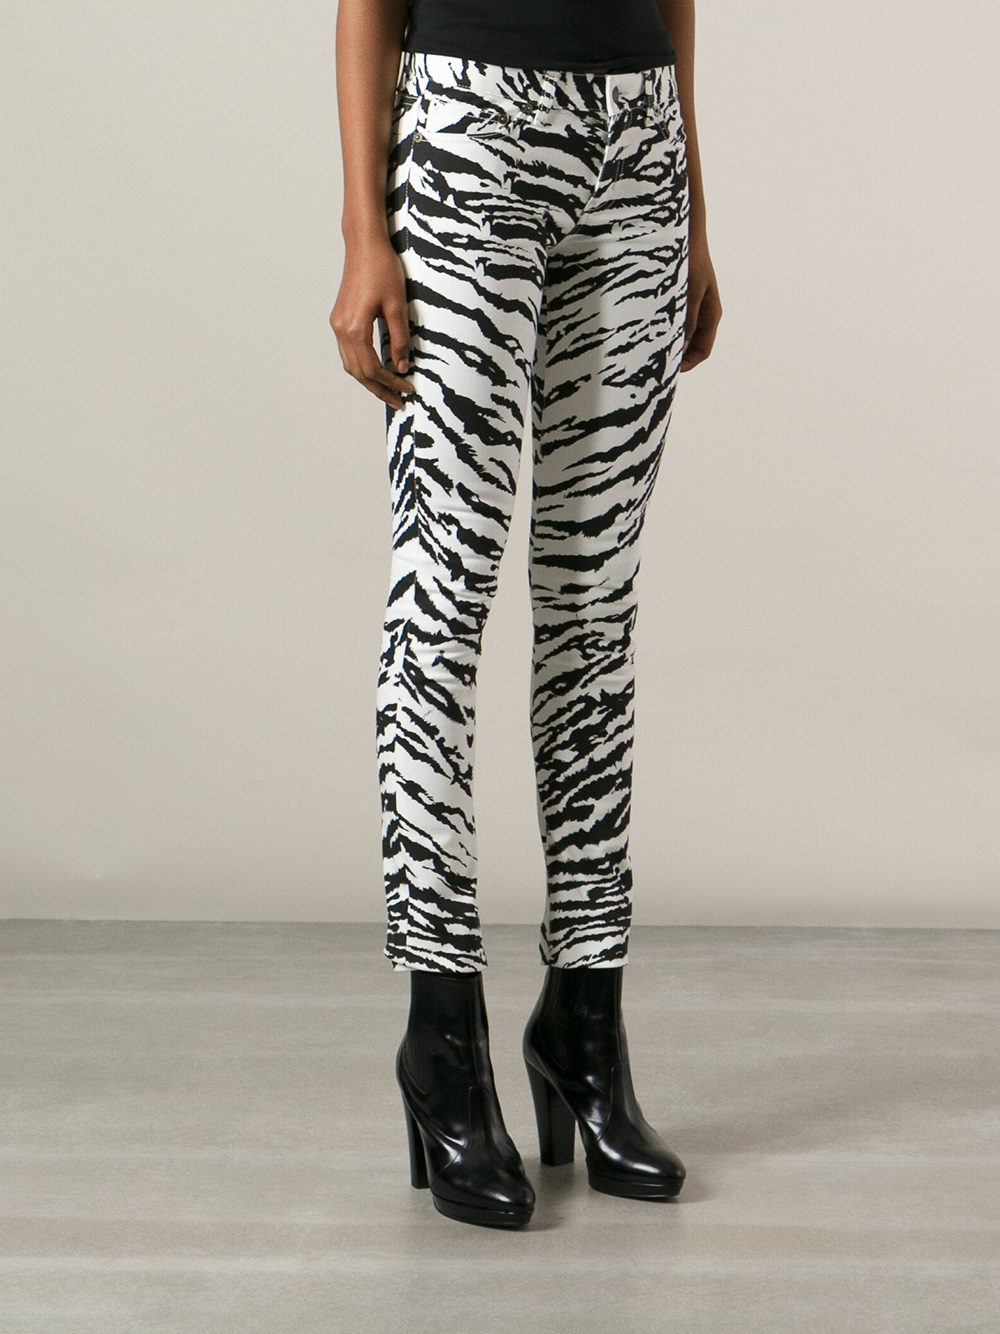 Saint Laurent Zebra Print Skinny Jean in White (Black) - Lyst